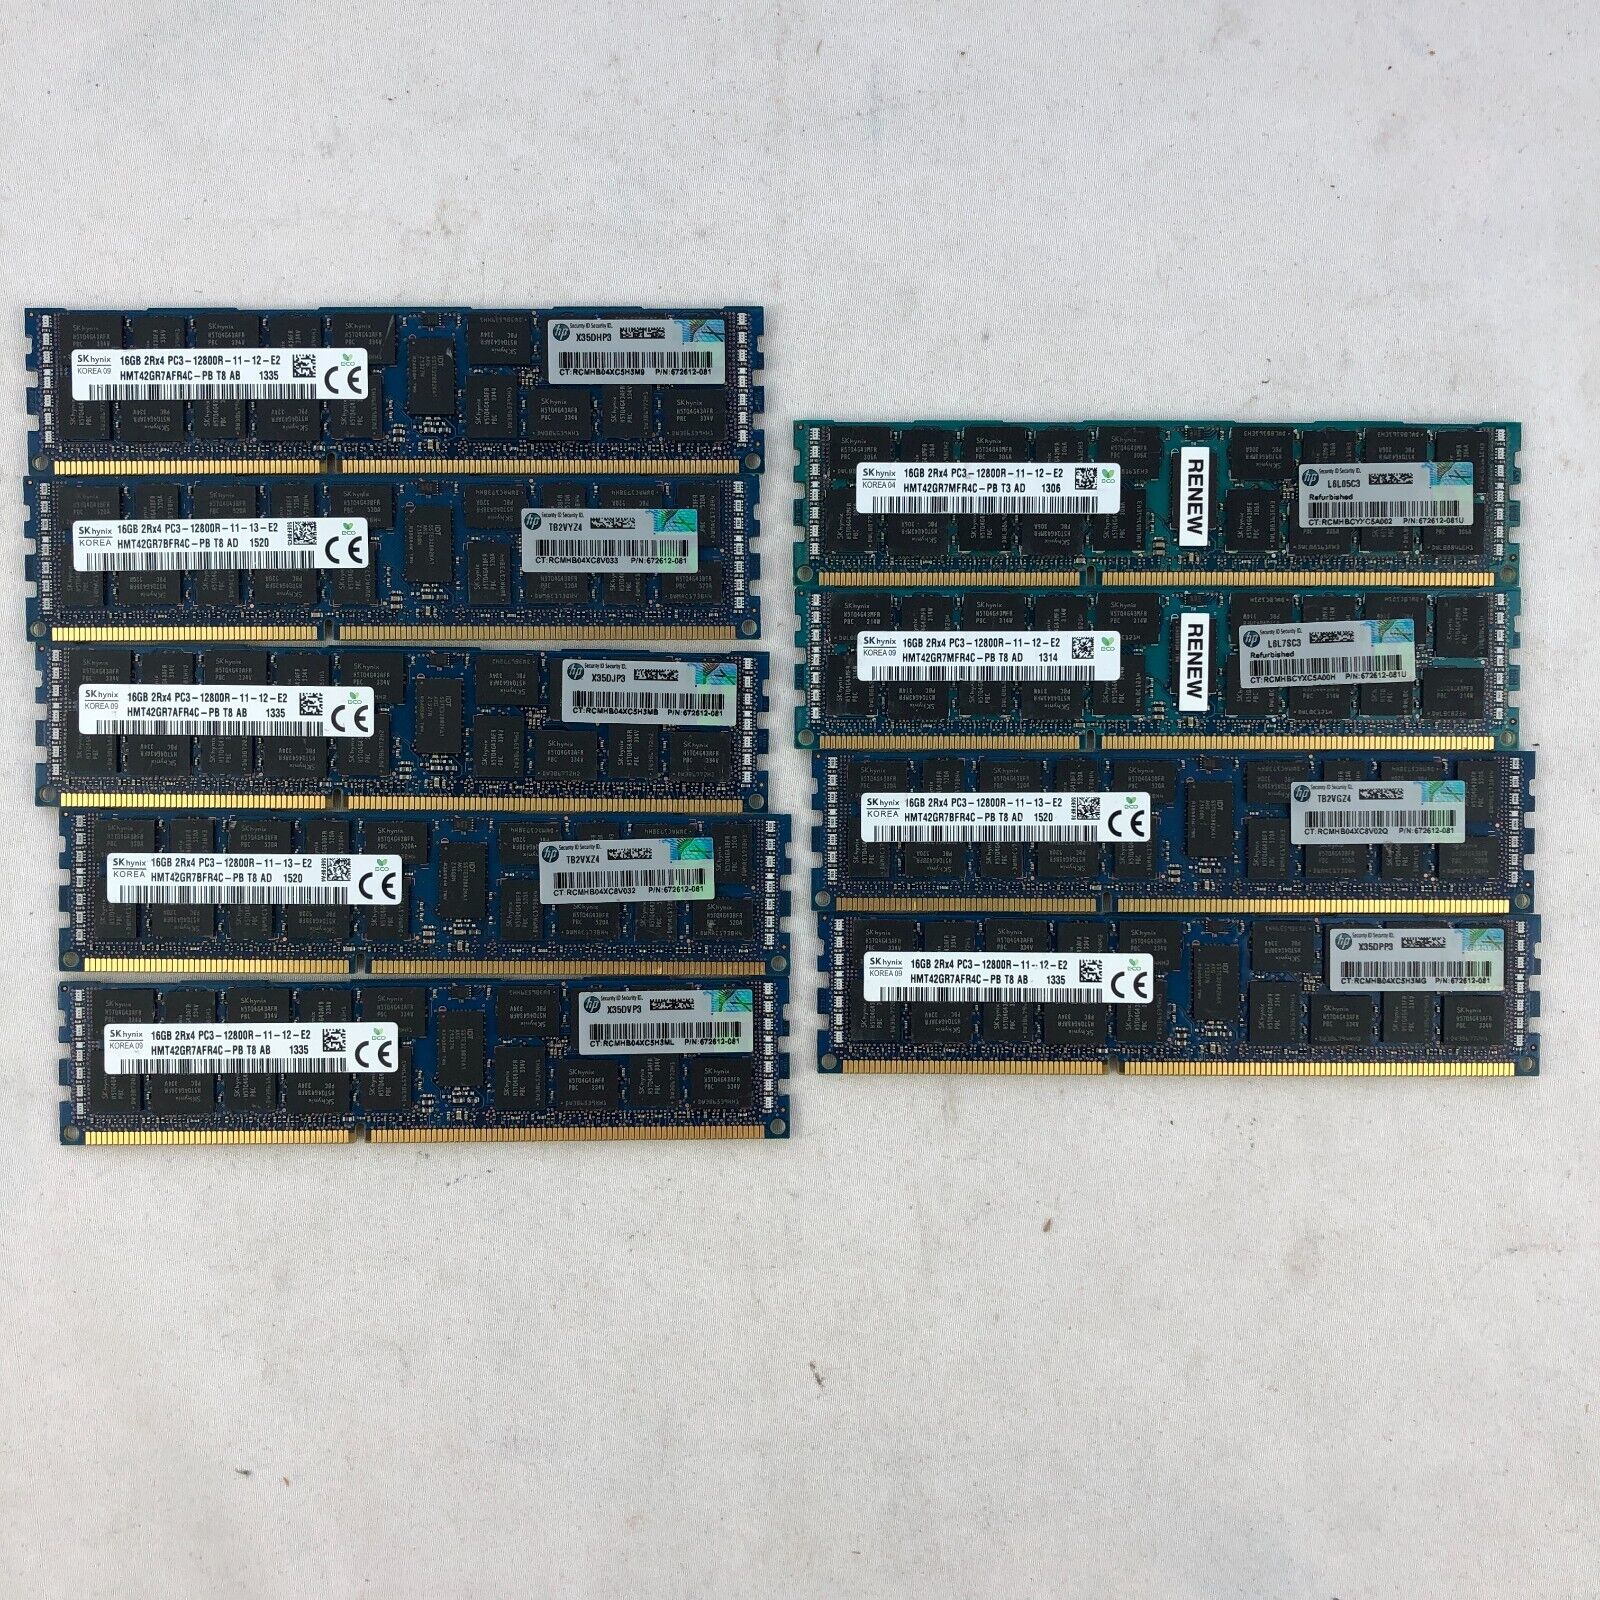 LOT OF 9 SK Hynix 16GB 2Rx4 PC3-12800R HMT42GR7AFR4C-PB T8 SERVER MEMORY RAM ECC